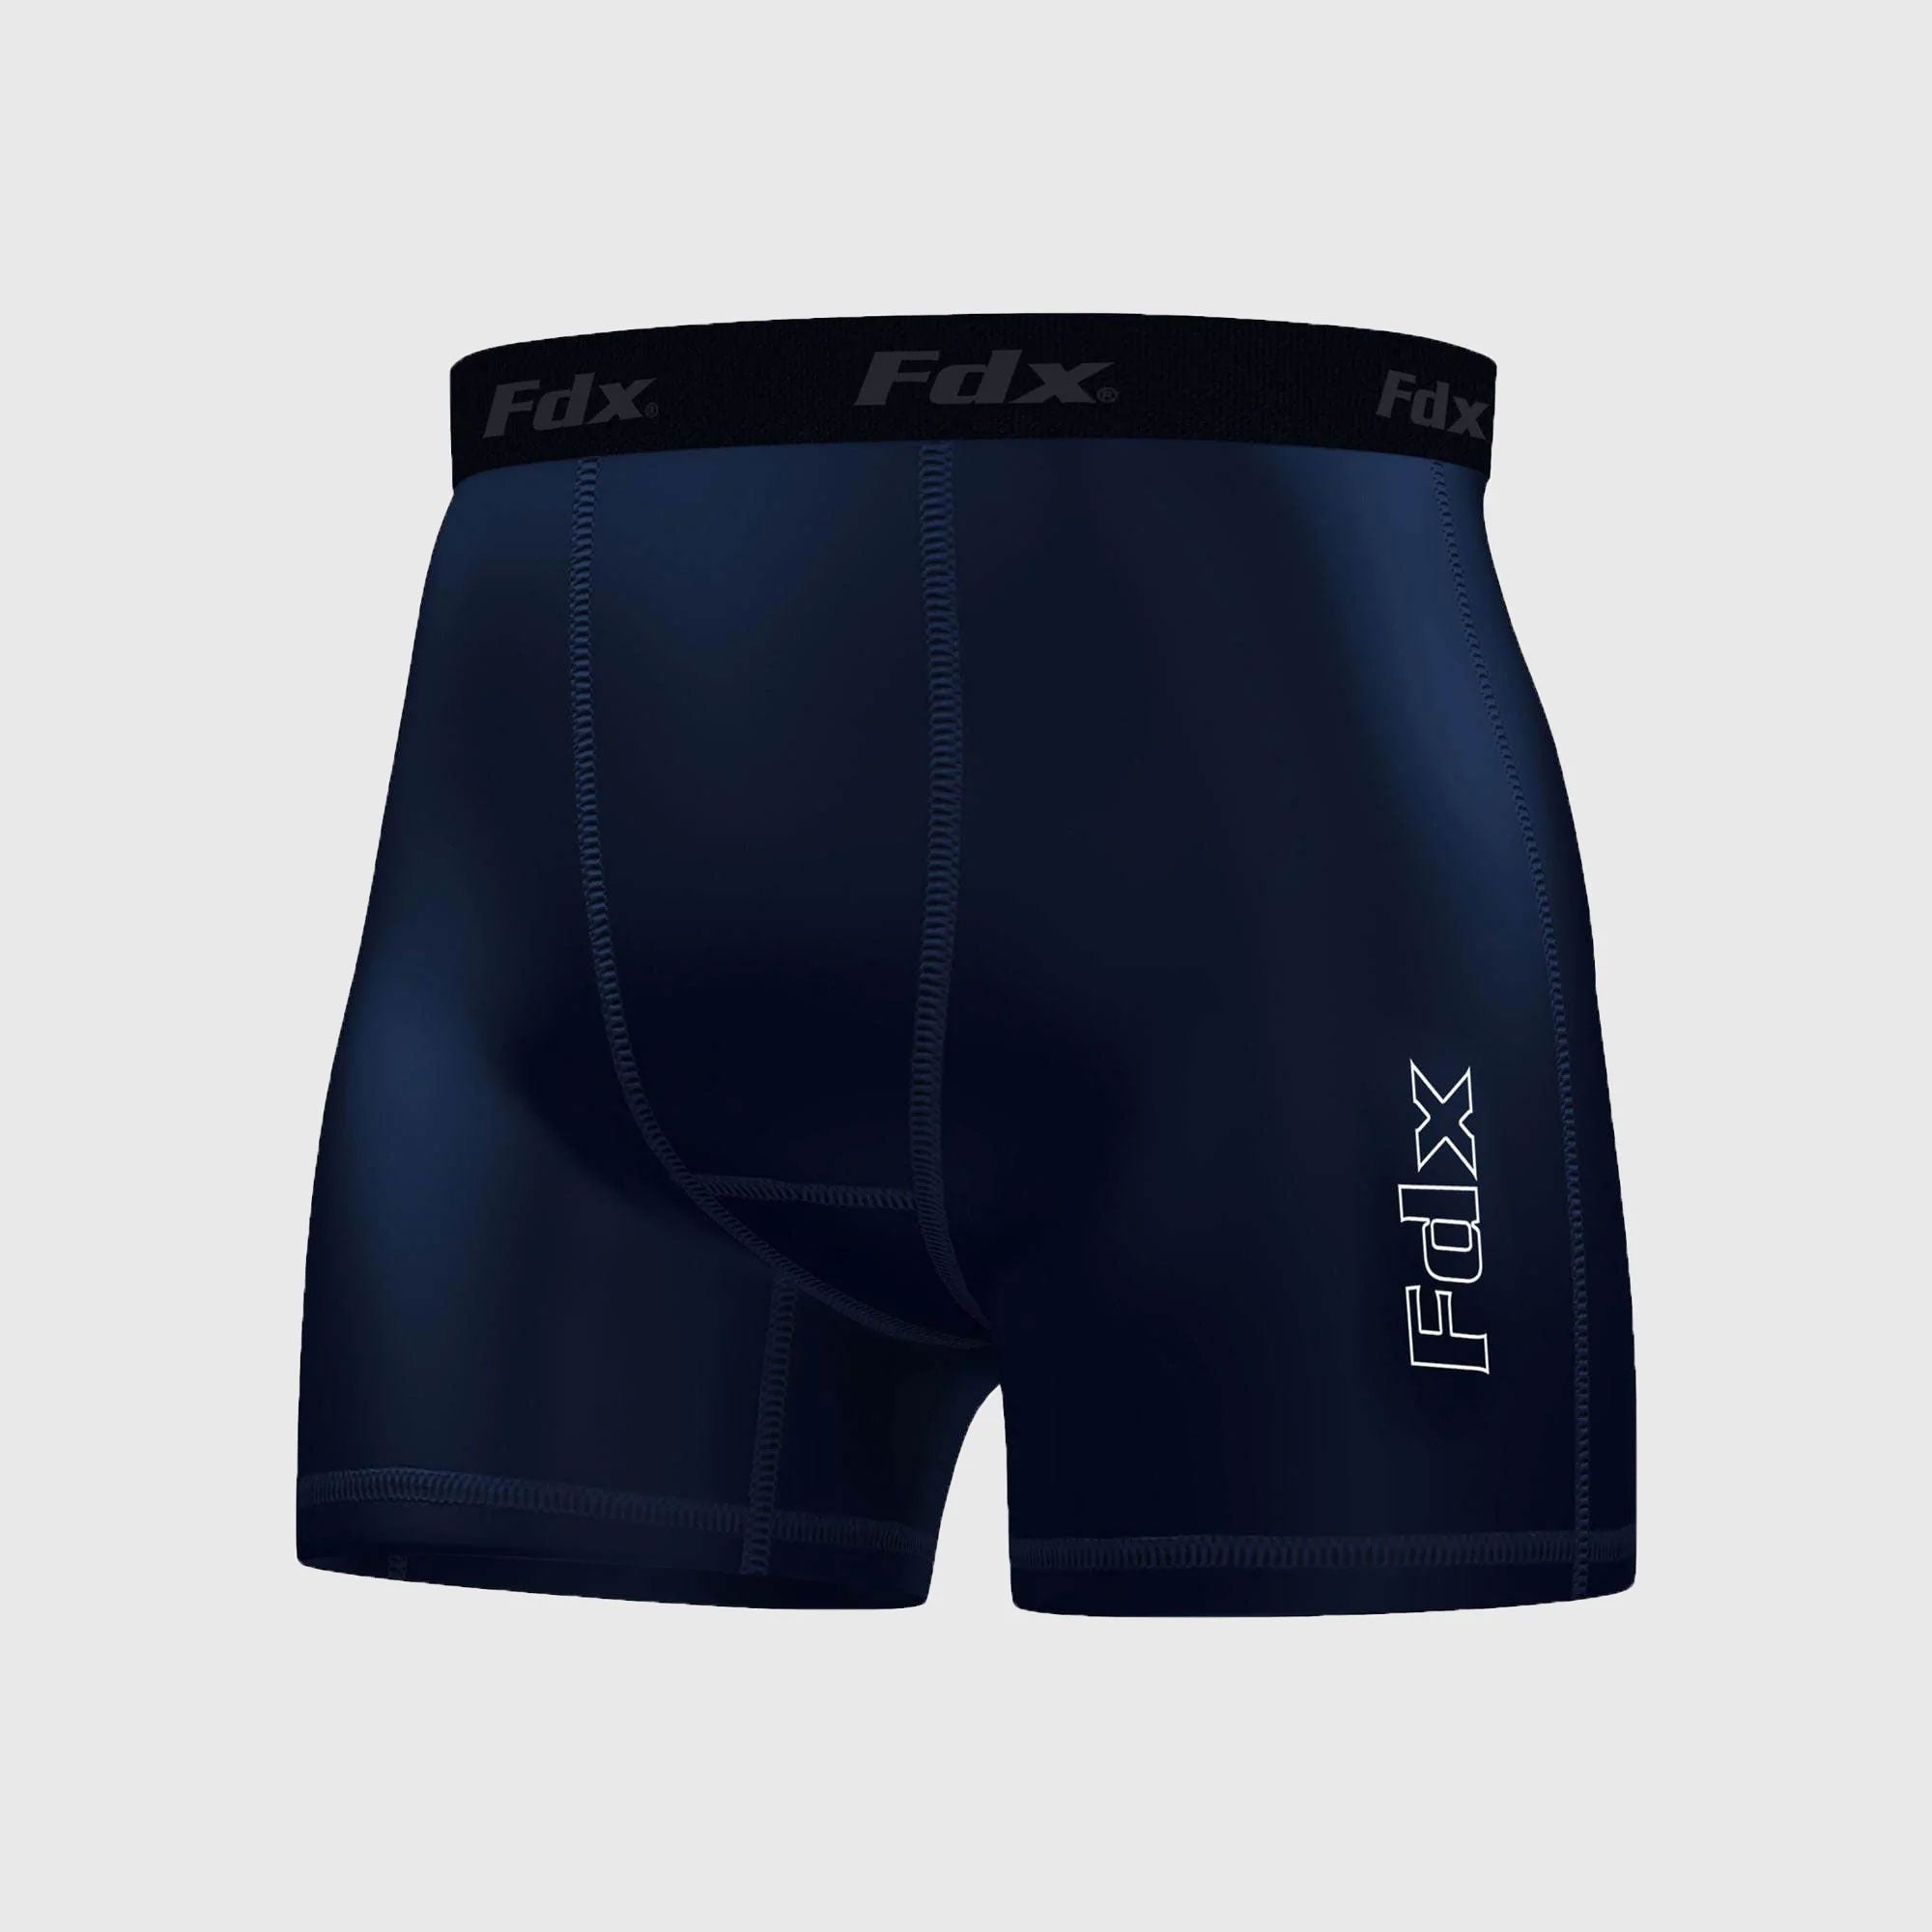 Fdx A5 Navy Blue Men's Boxer Shorts